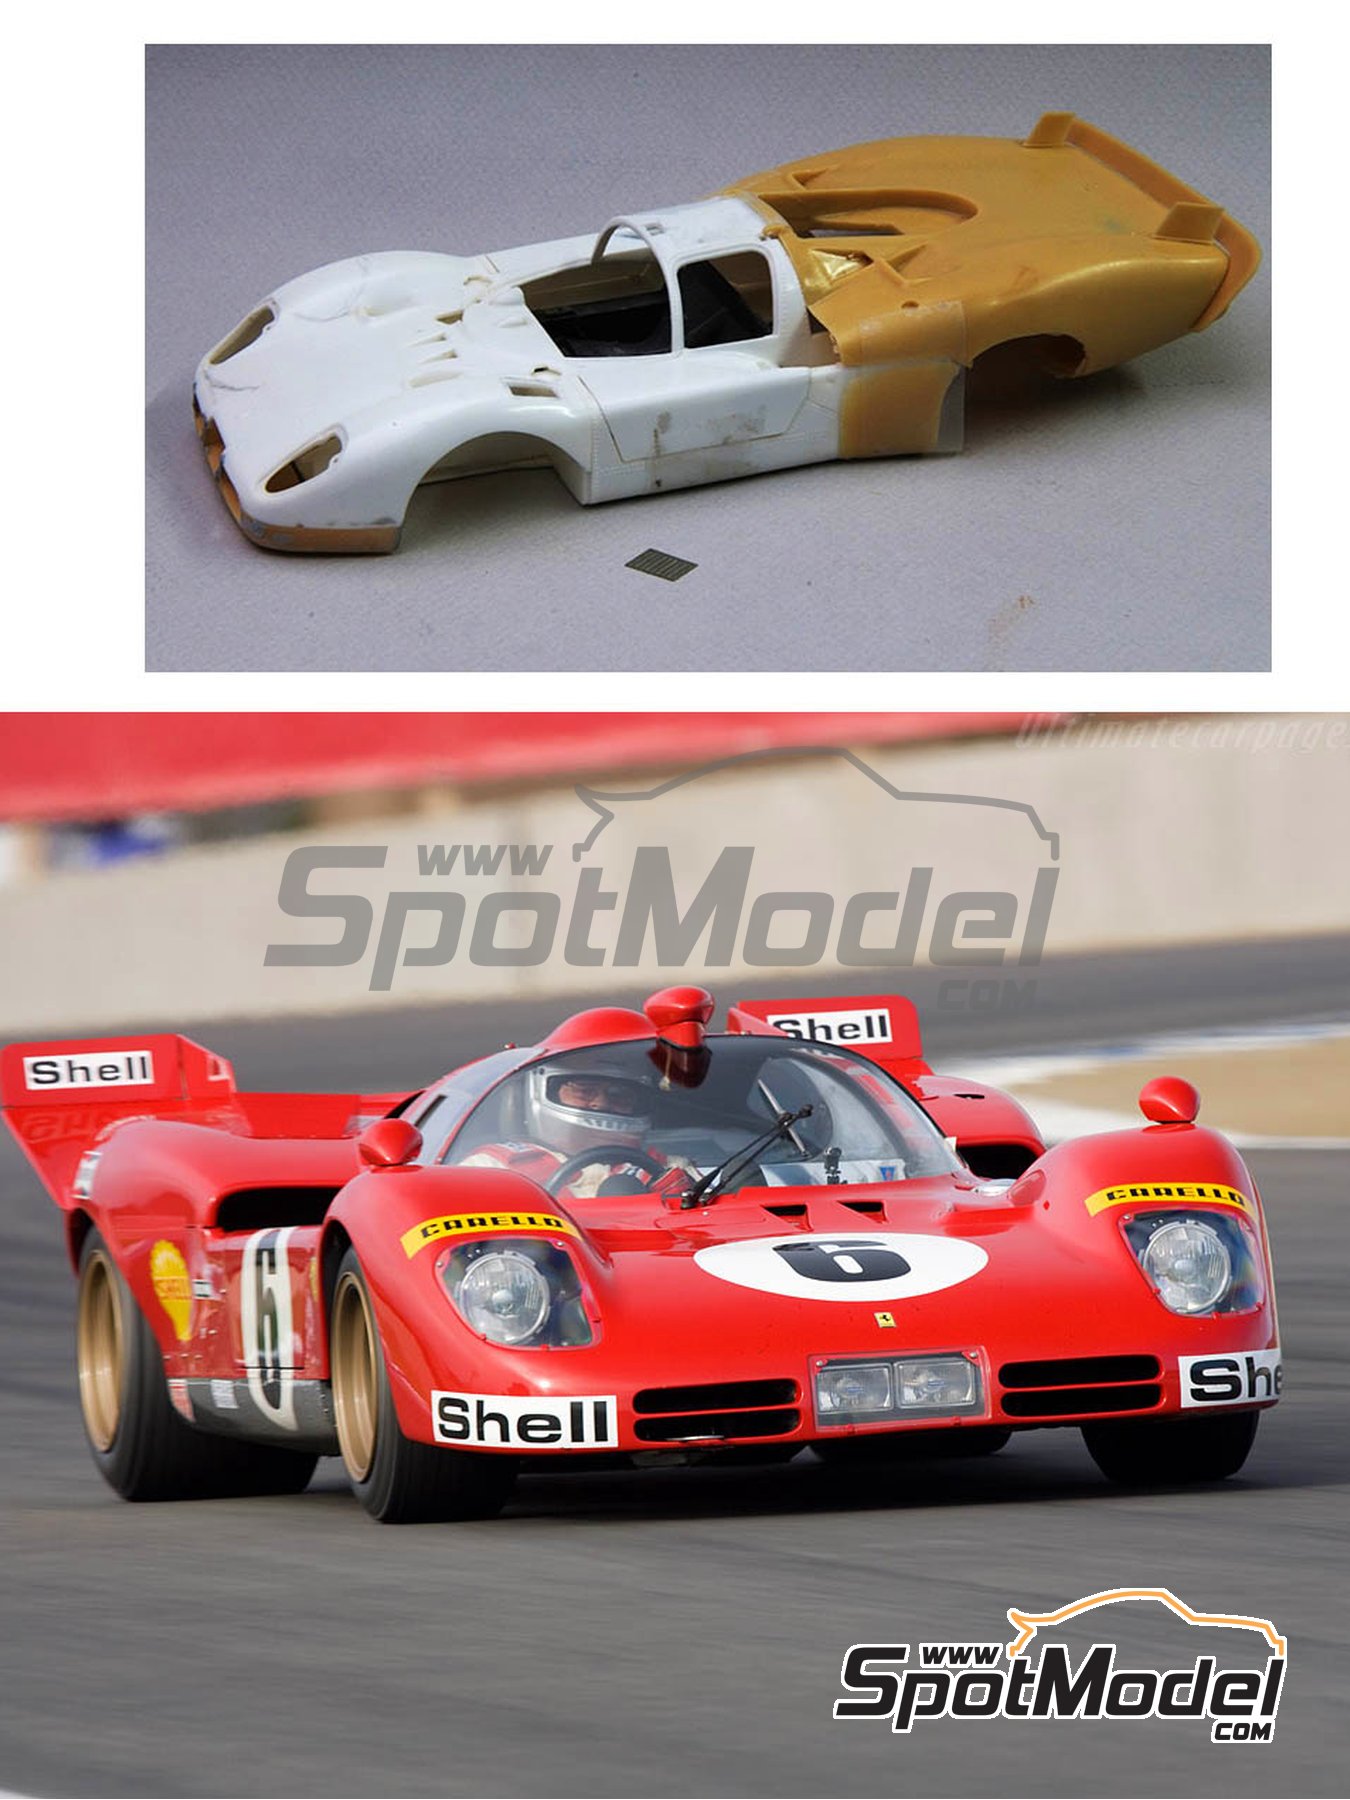 Renaissance Models TK24/305: Marking / livery 1/24 scale - Ferrari